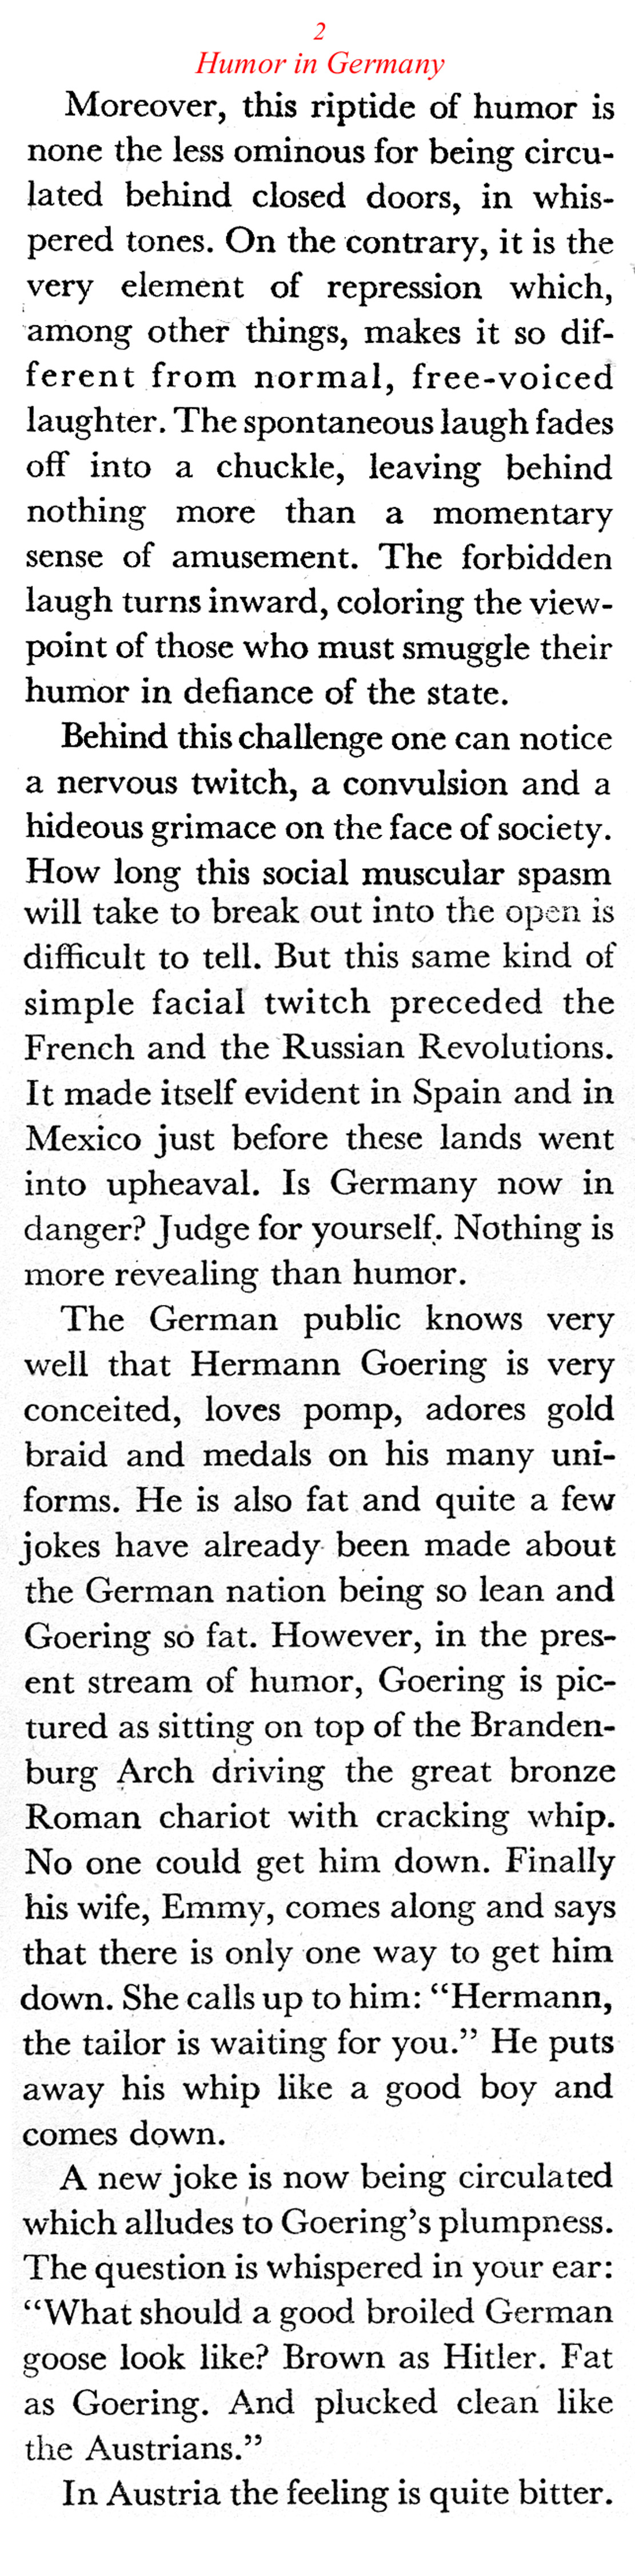 Jokes in Germany (Coronet Magazine, 1939)